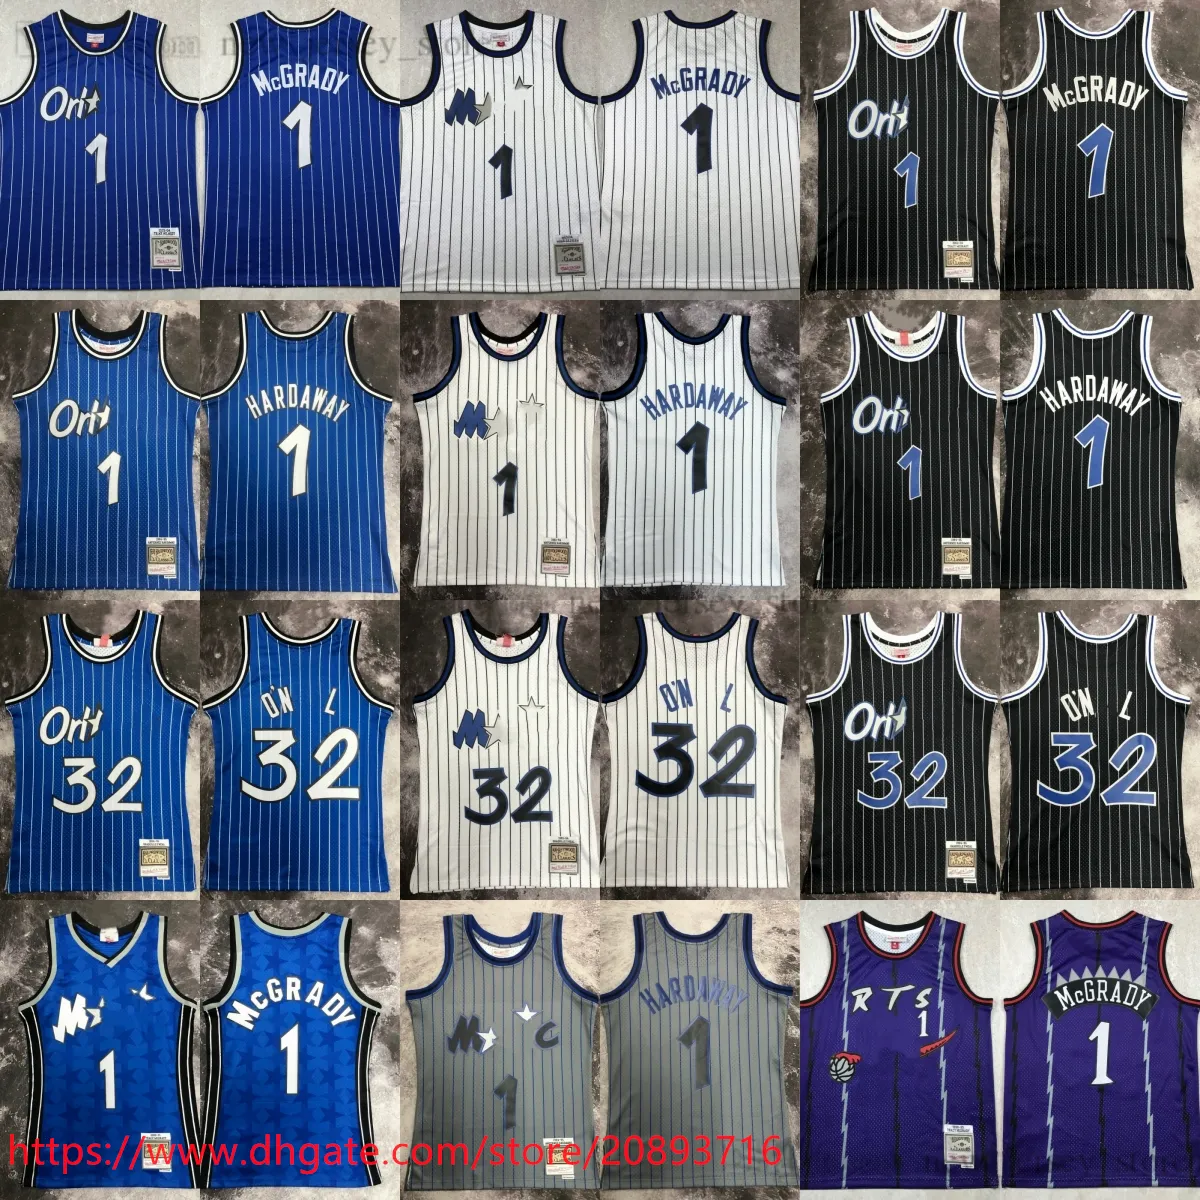 2003-04 Basketball Tracy McGrady Jersey 1994-95 Penny Hardaway Trikots 2000-01 Dunkle Stars McGrady Shirts Blau